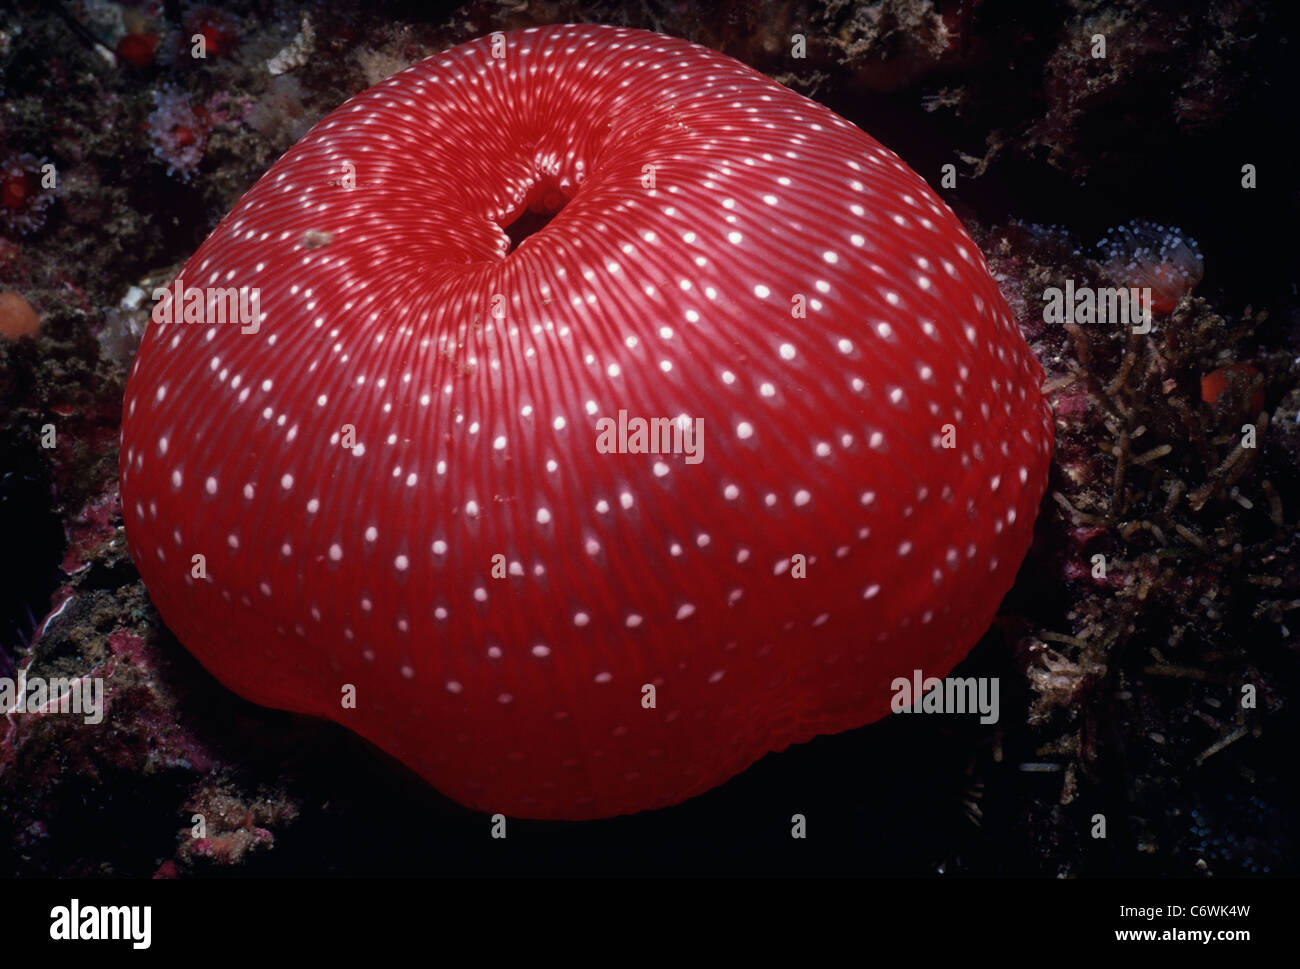 Strawberry Anemone (Tealia lofotensis) closed. Channel Islands, California (USA) - Pacific Ocean Stock Photo